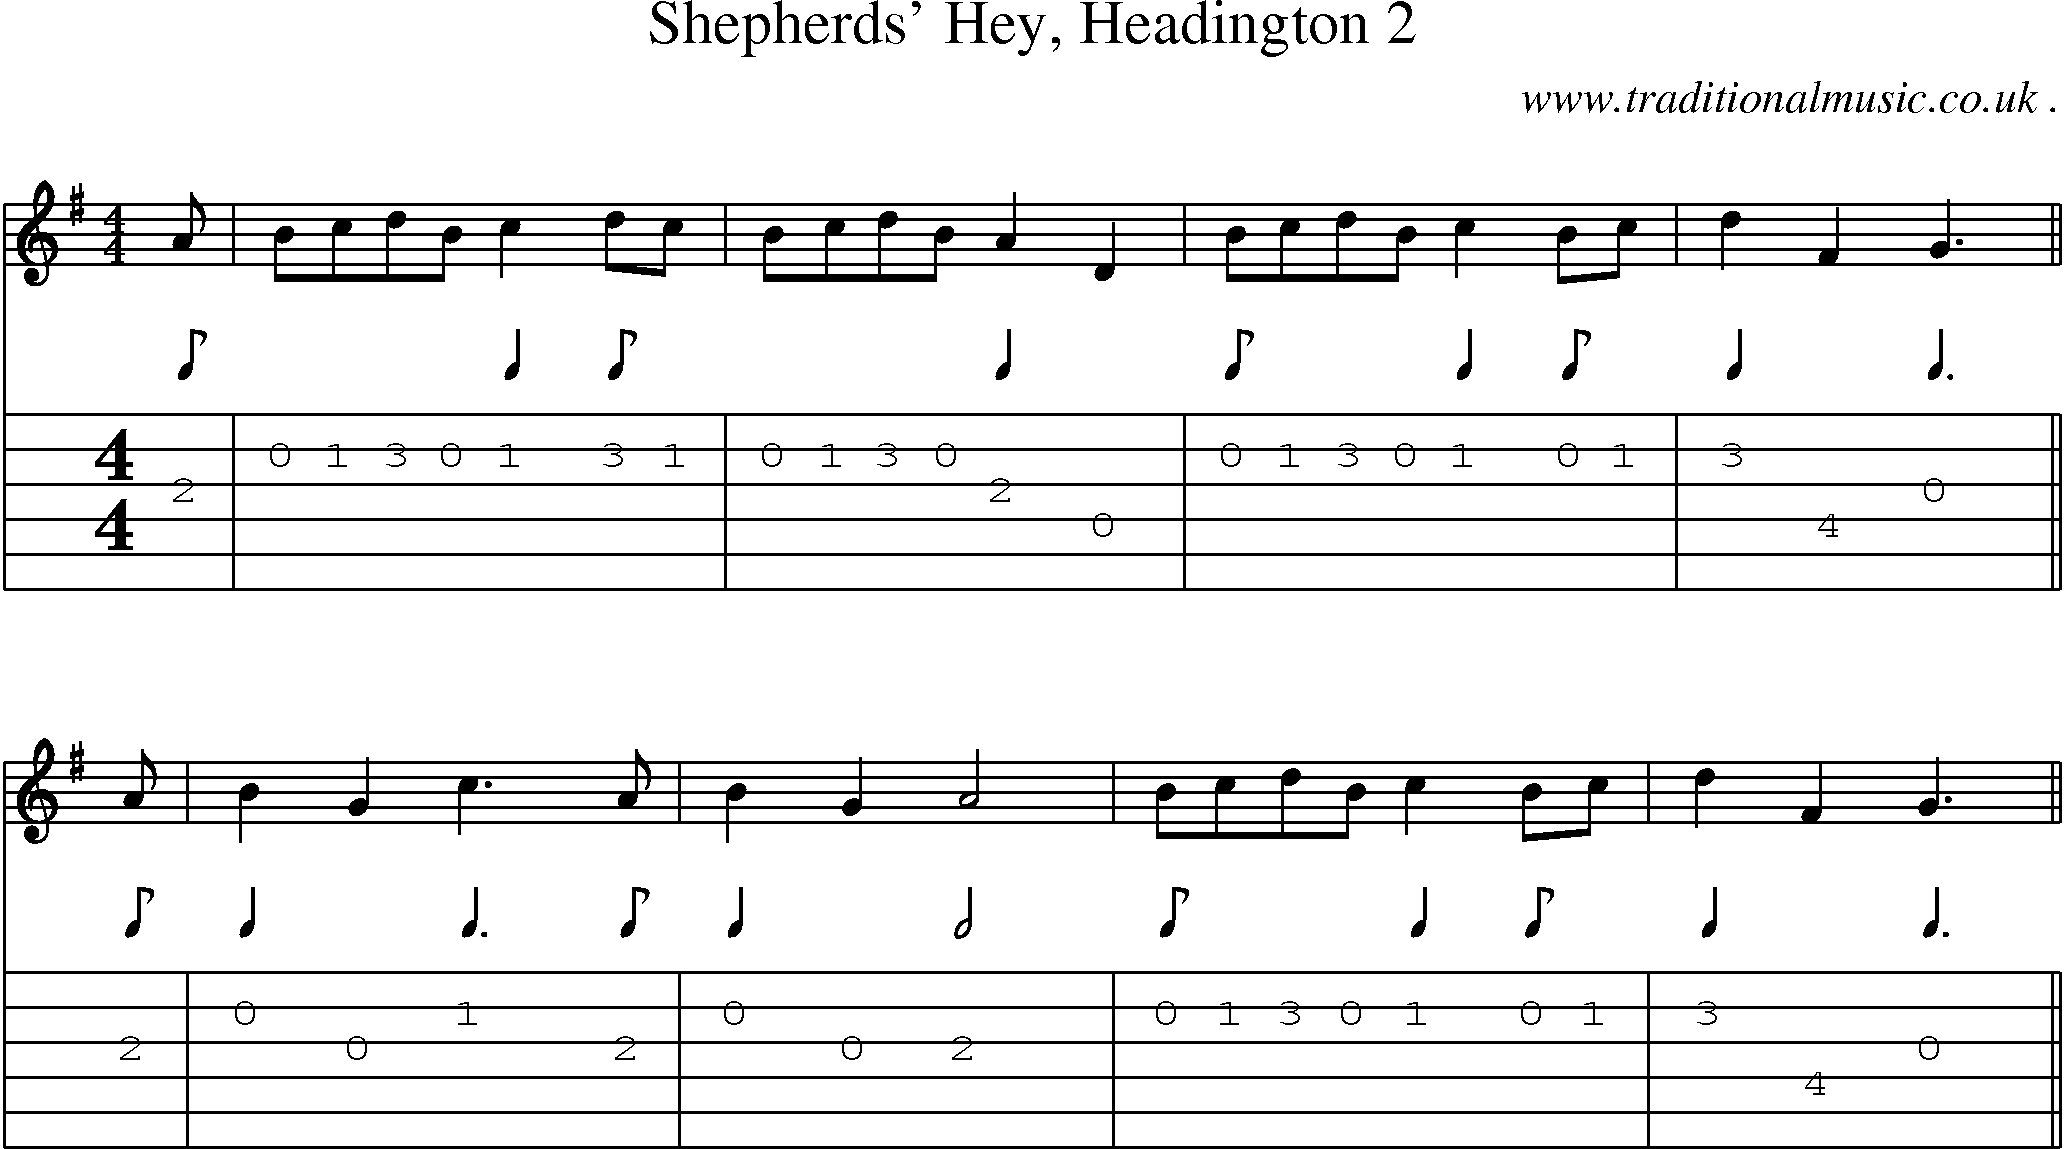 Sheet-Music and Guitar Tabs for Shepherds Hey Headington 2